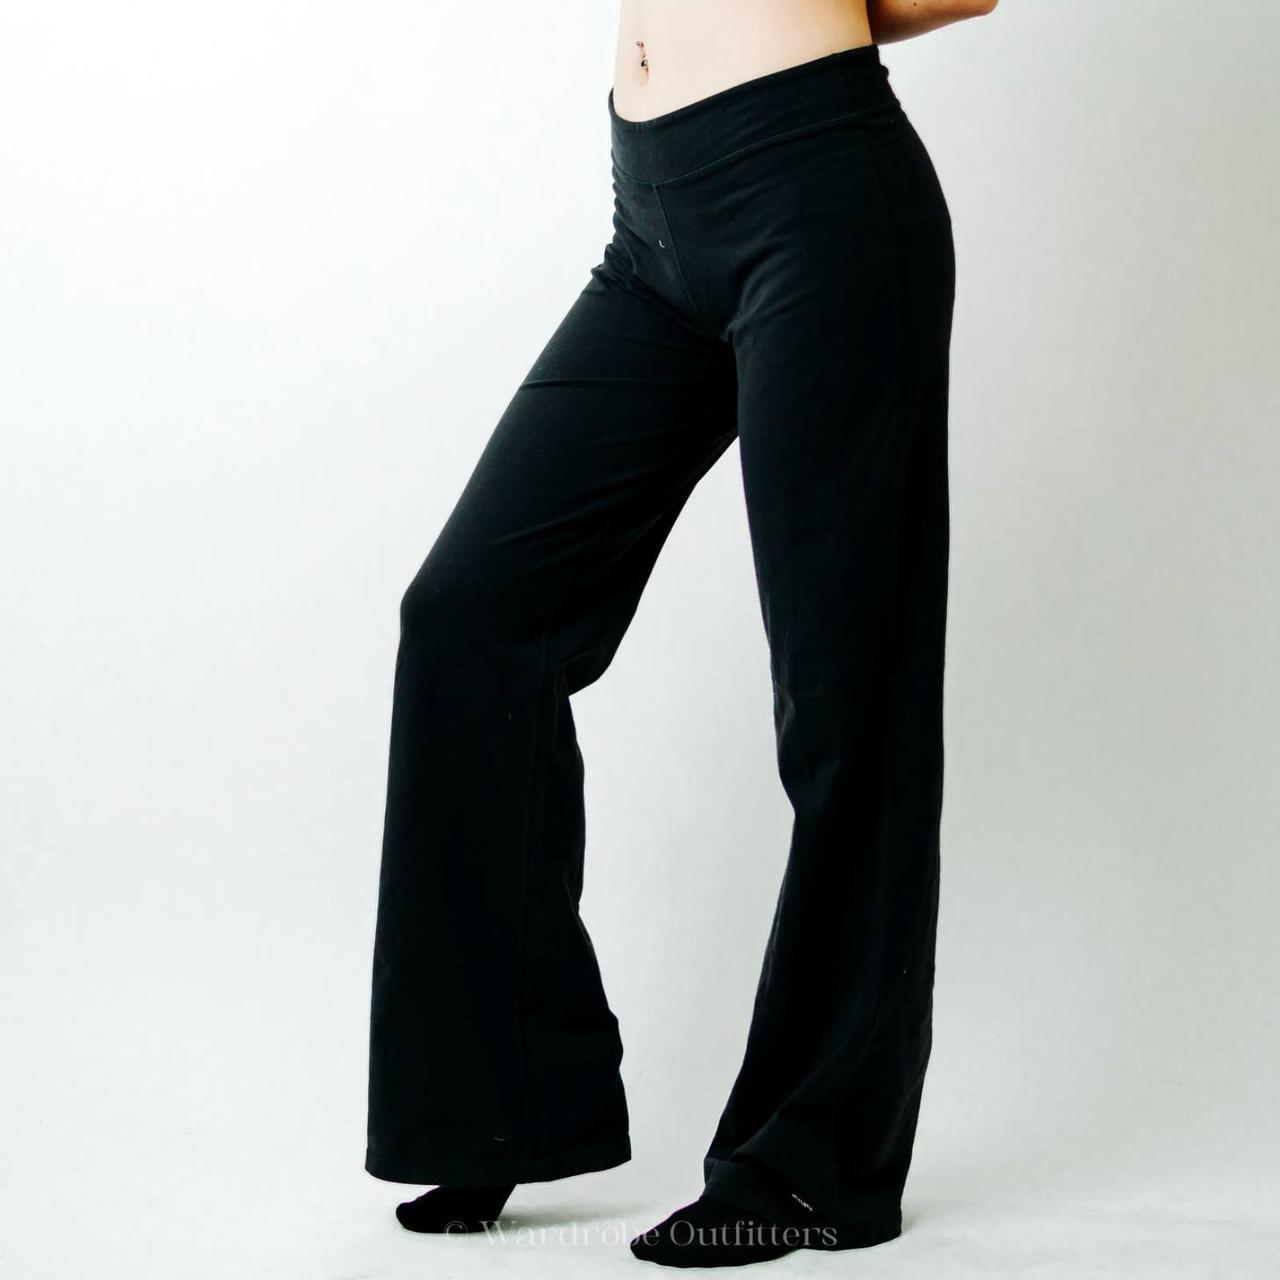 black flare yoga pant leggings in the size medium. - Depop